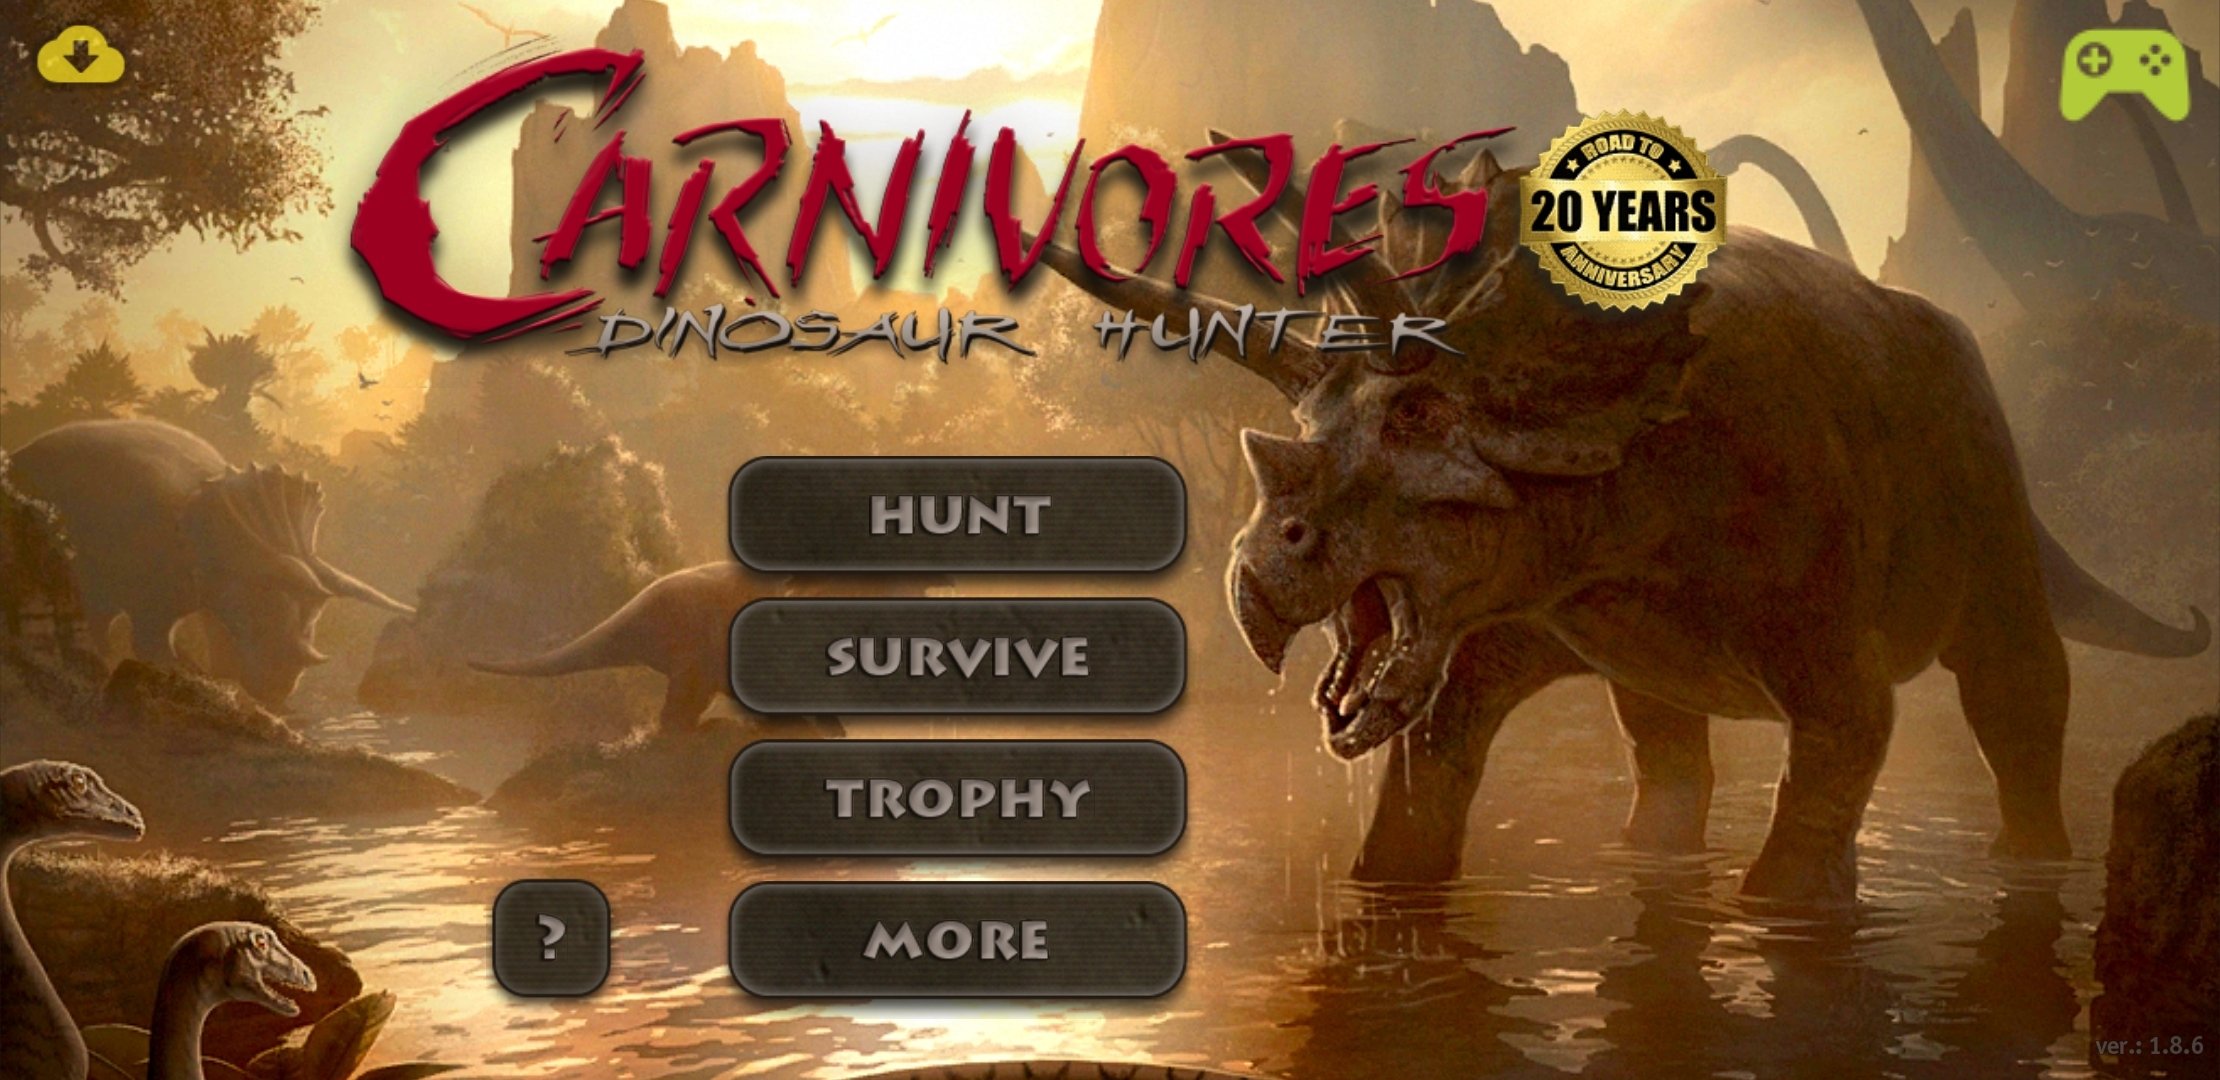 carnivores dinosaur hunter pc free download